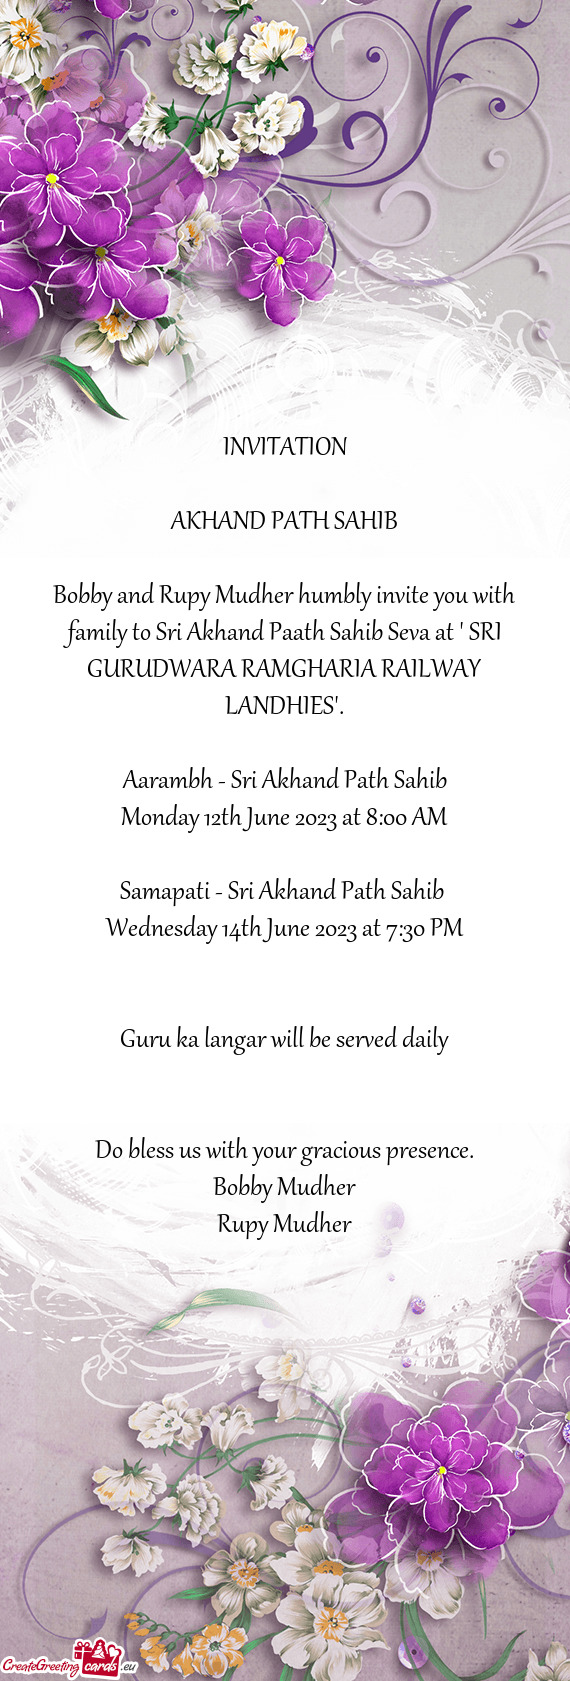 Bobby and Rupy Mudher humbly invite you with family to Sri Akhand Paath Sahib Seva at " SRI GURUDWAR